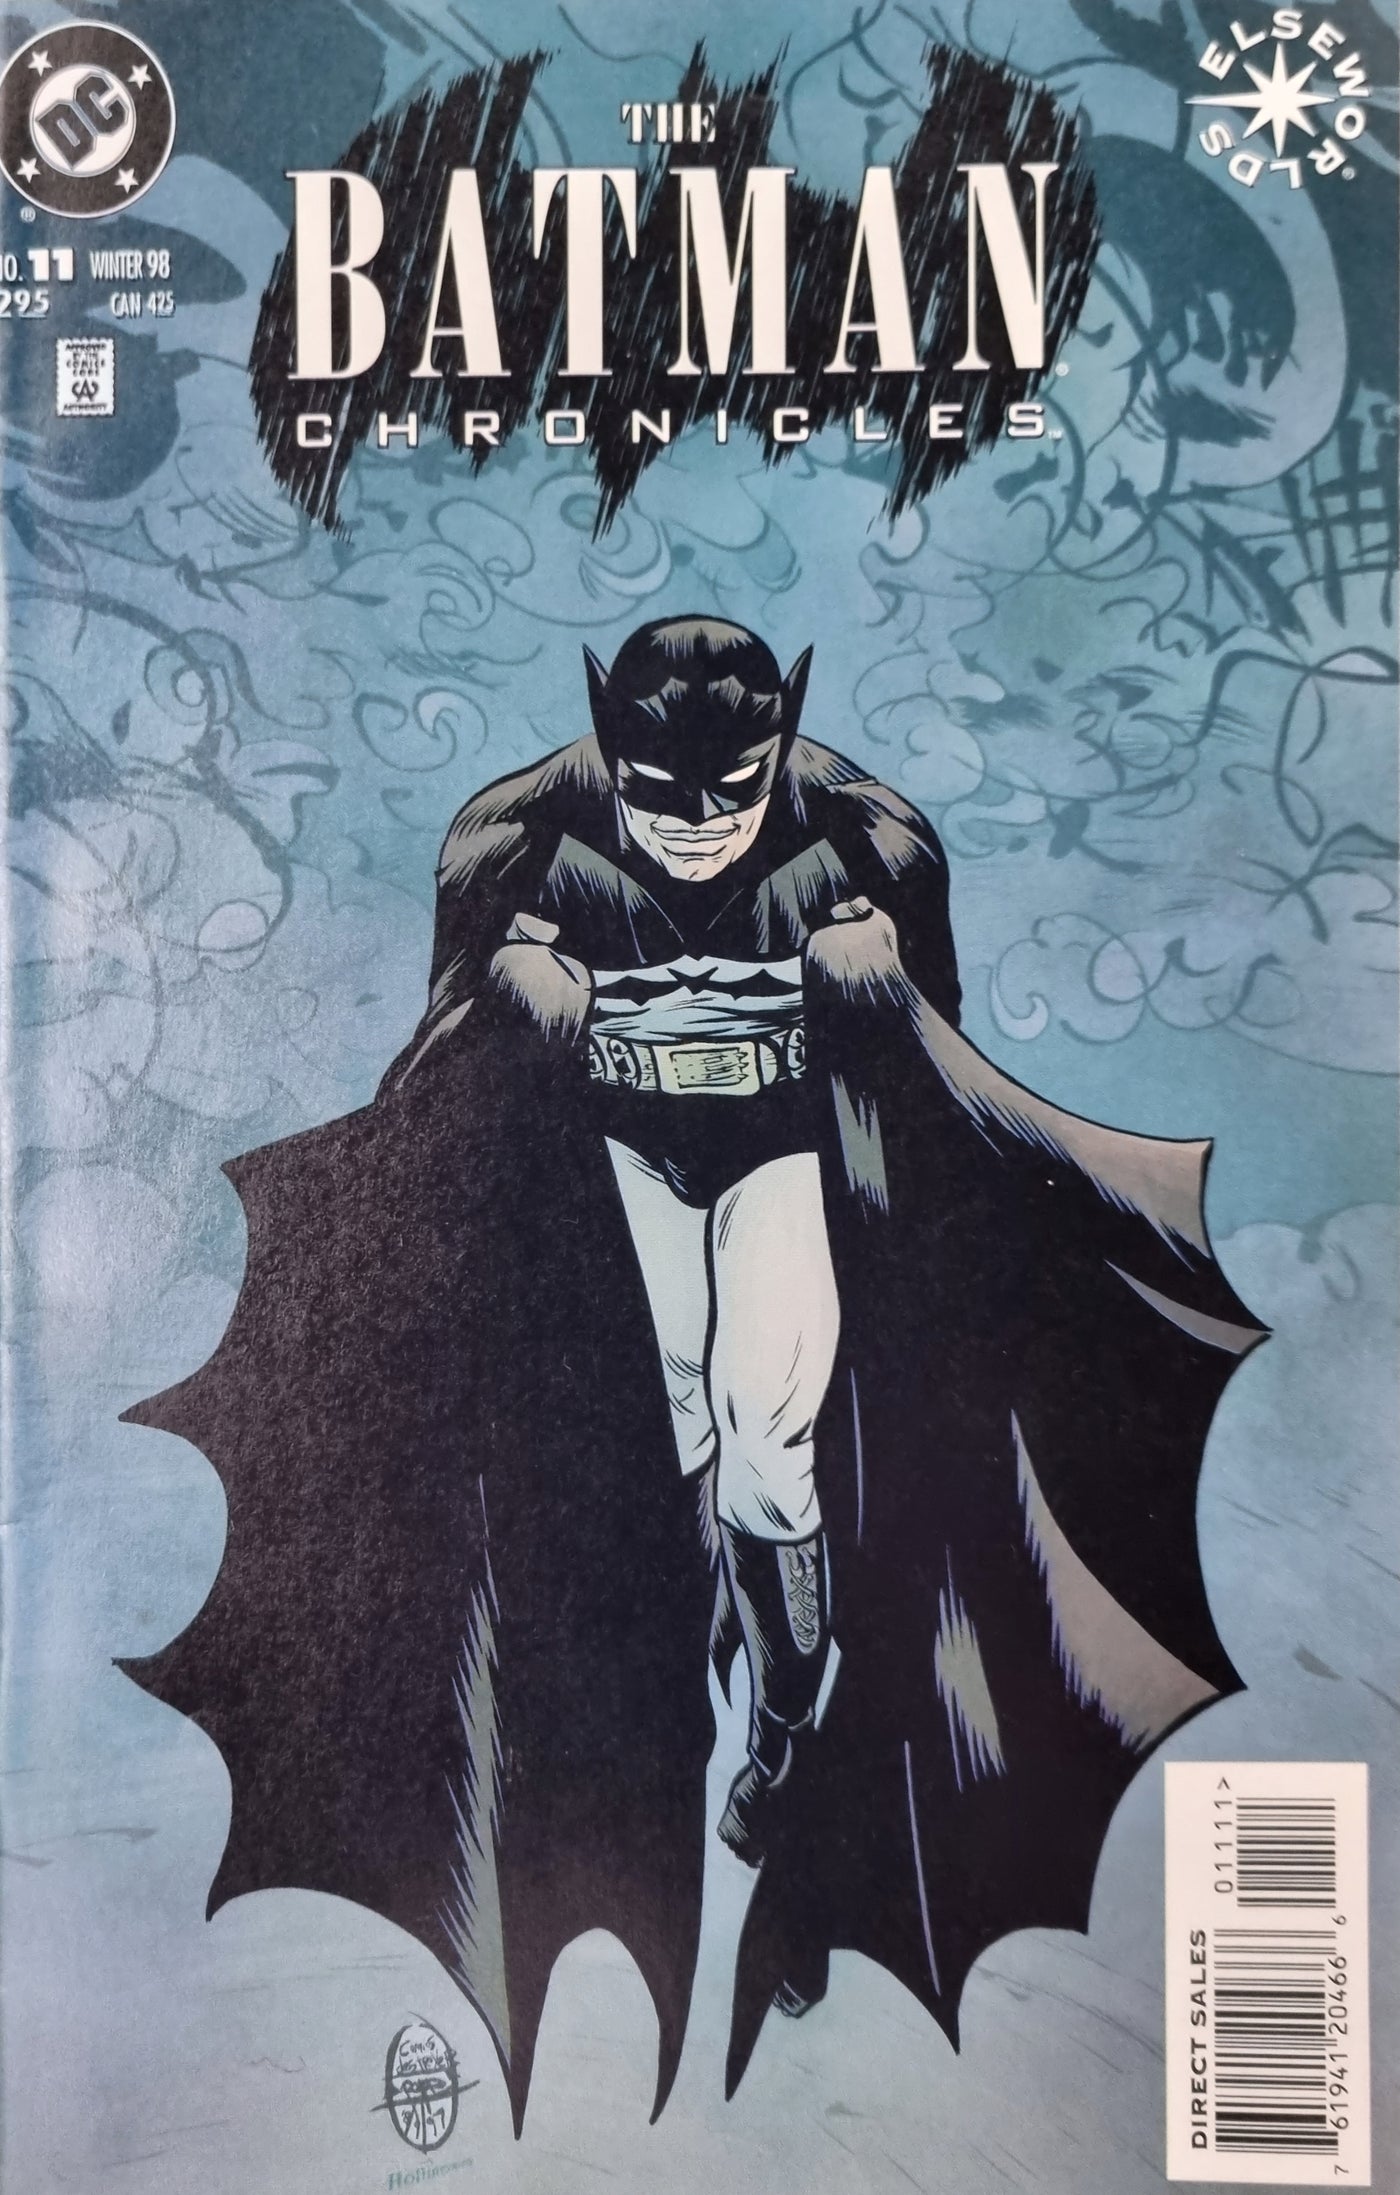 The Batman Chronicles (Volume 1) #11